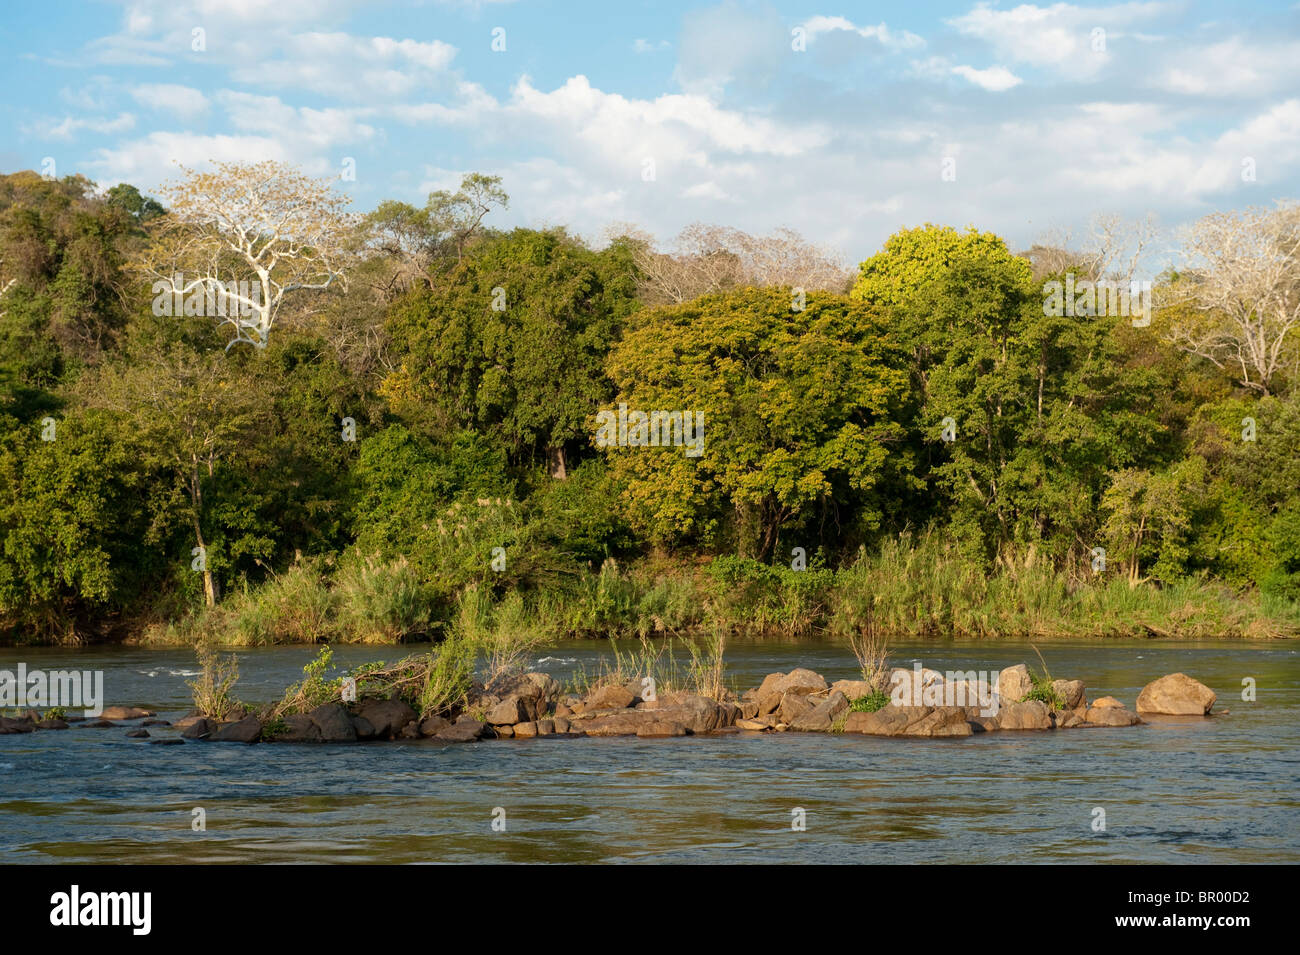 Río Shire, Majete Wildlife Reserve, Malawi Foto de stock